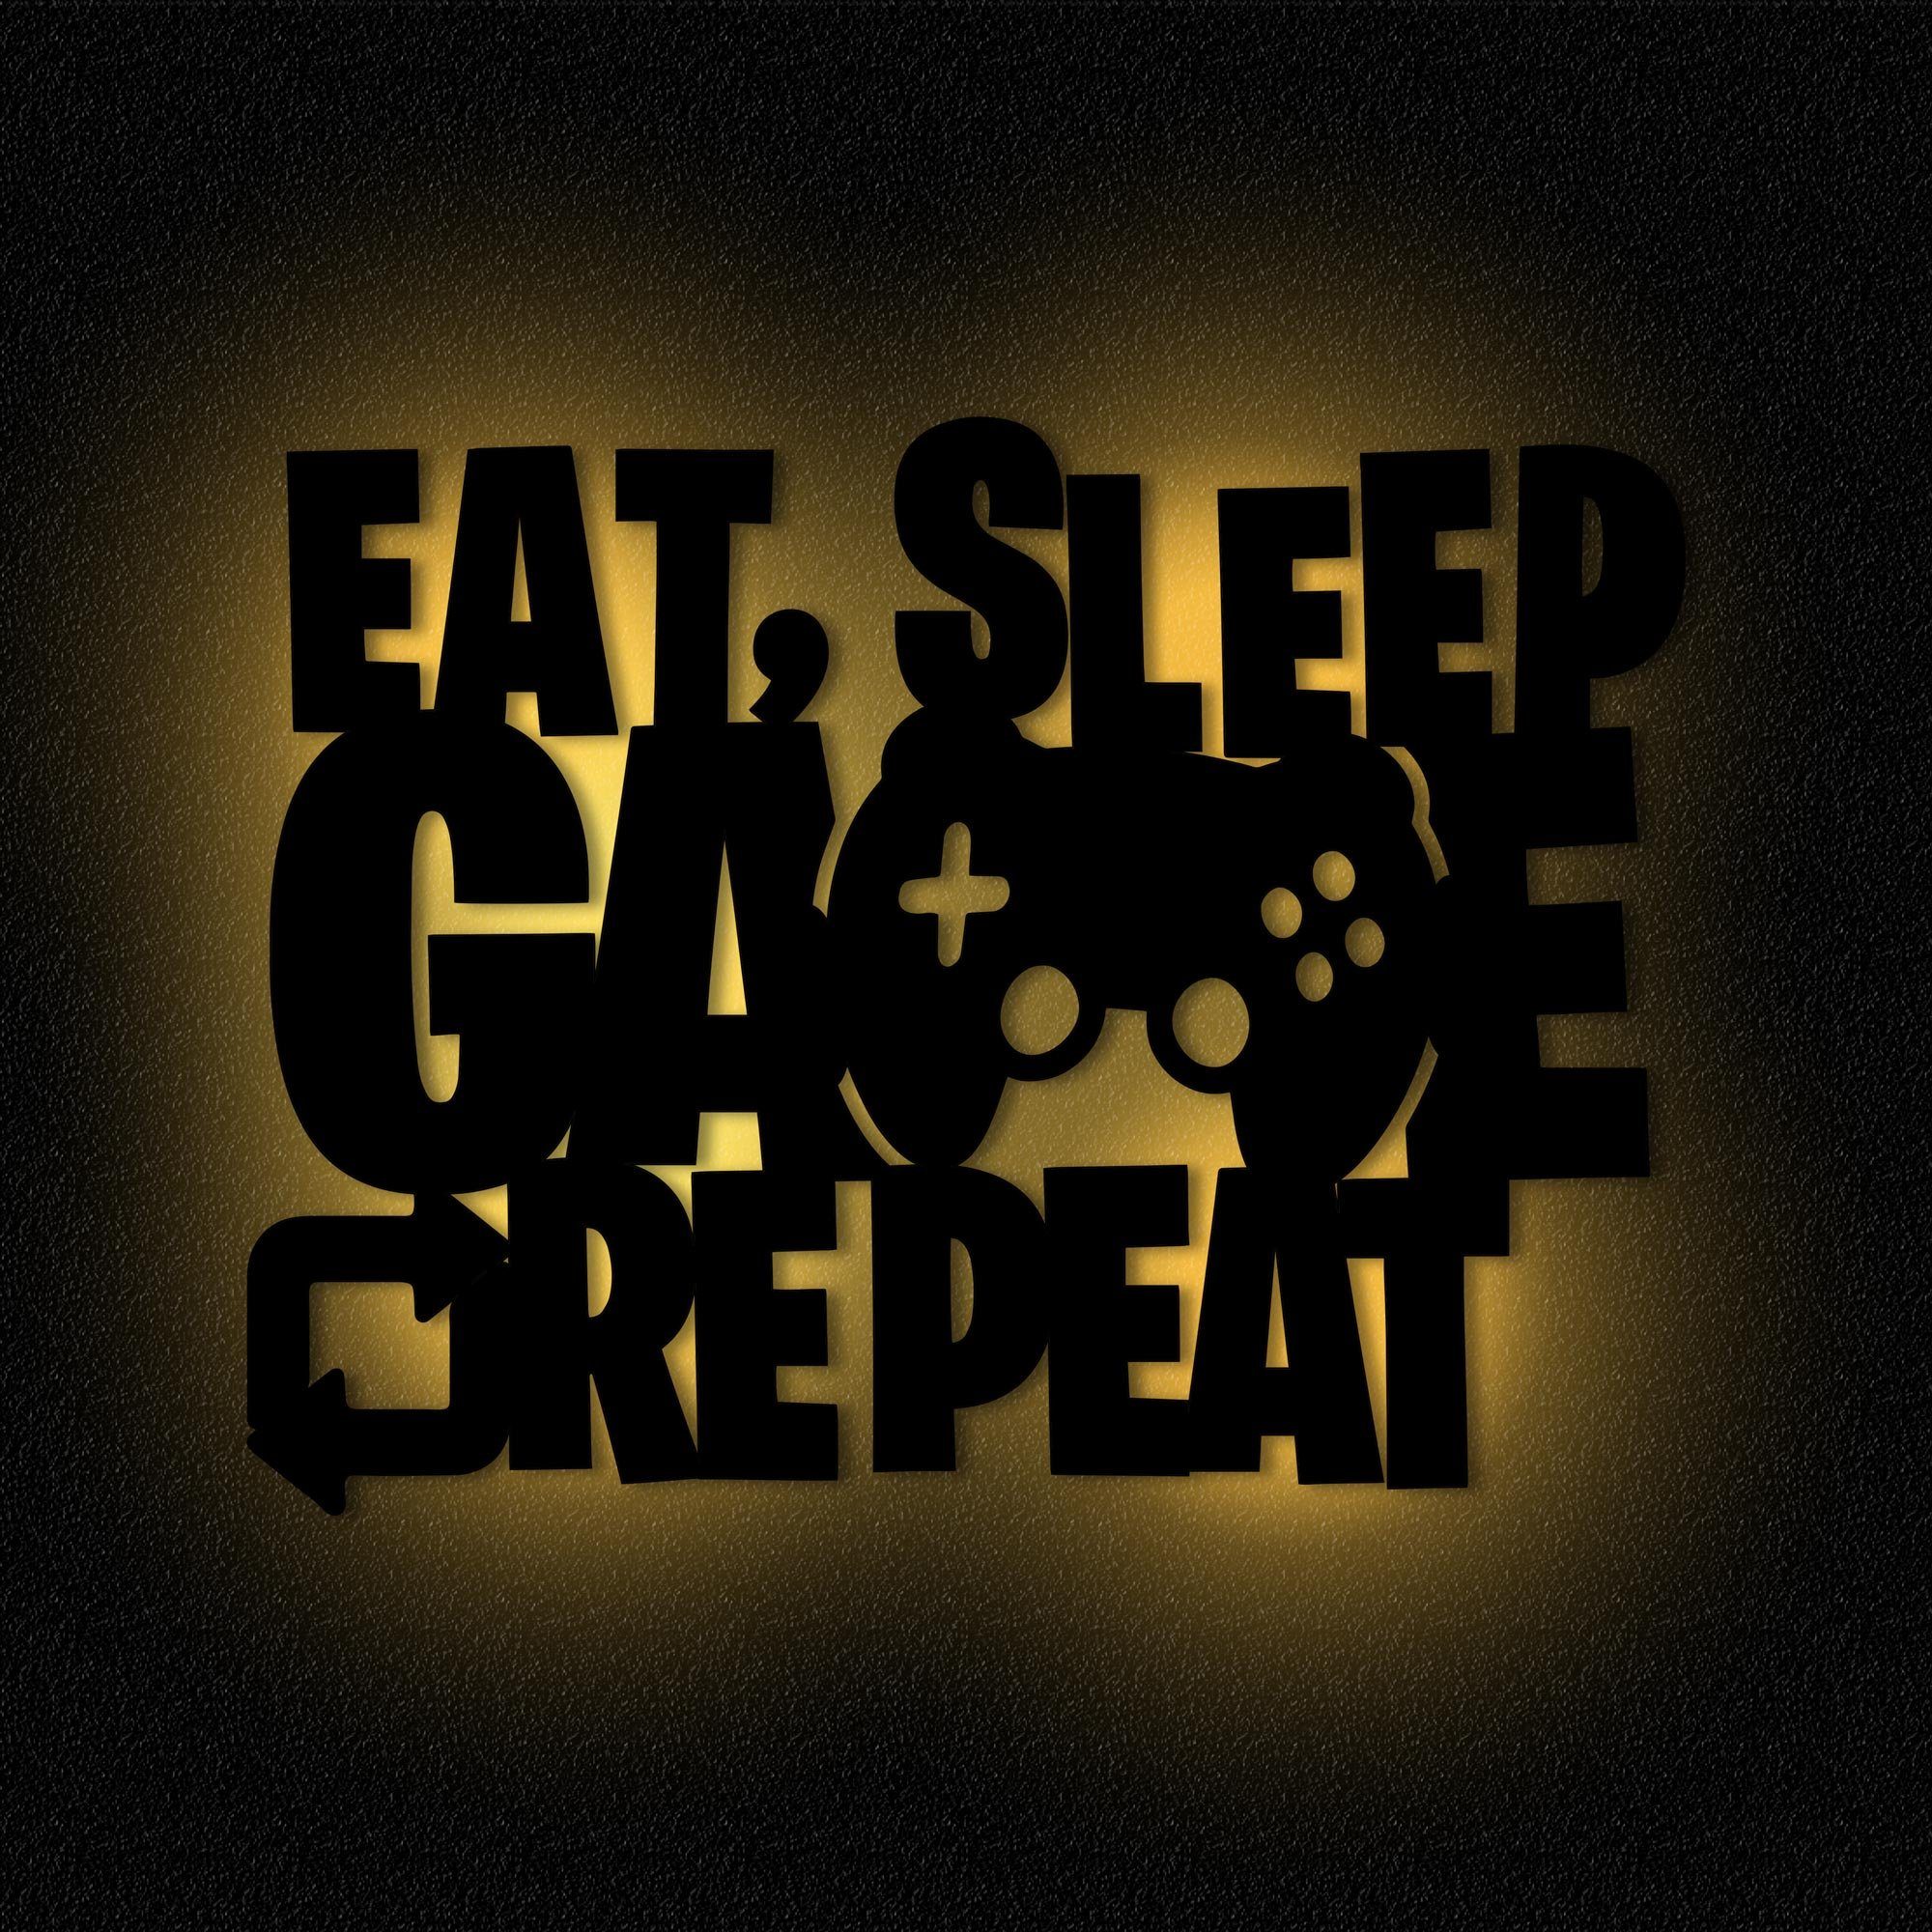 Namofactur LED MDF Warmweiß Nachtlicht integriert, Zimmer Holz, Wandlampe Repeat Eat I LED Gamer Game fest Deko Sleep